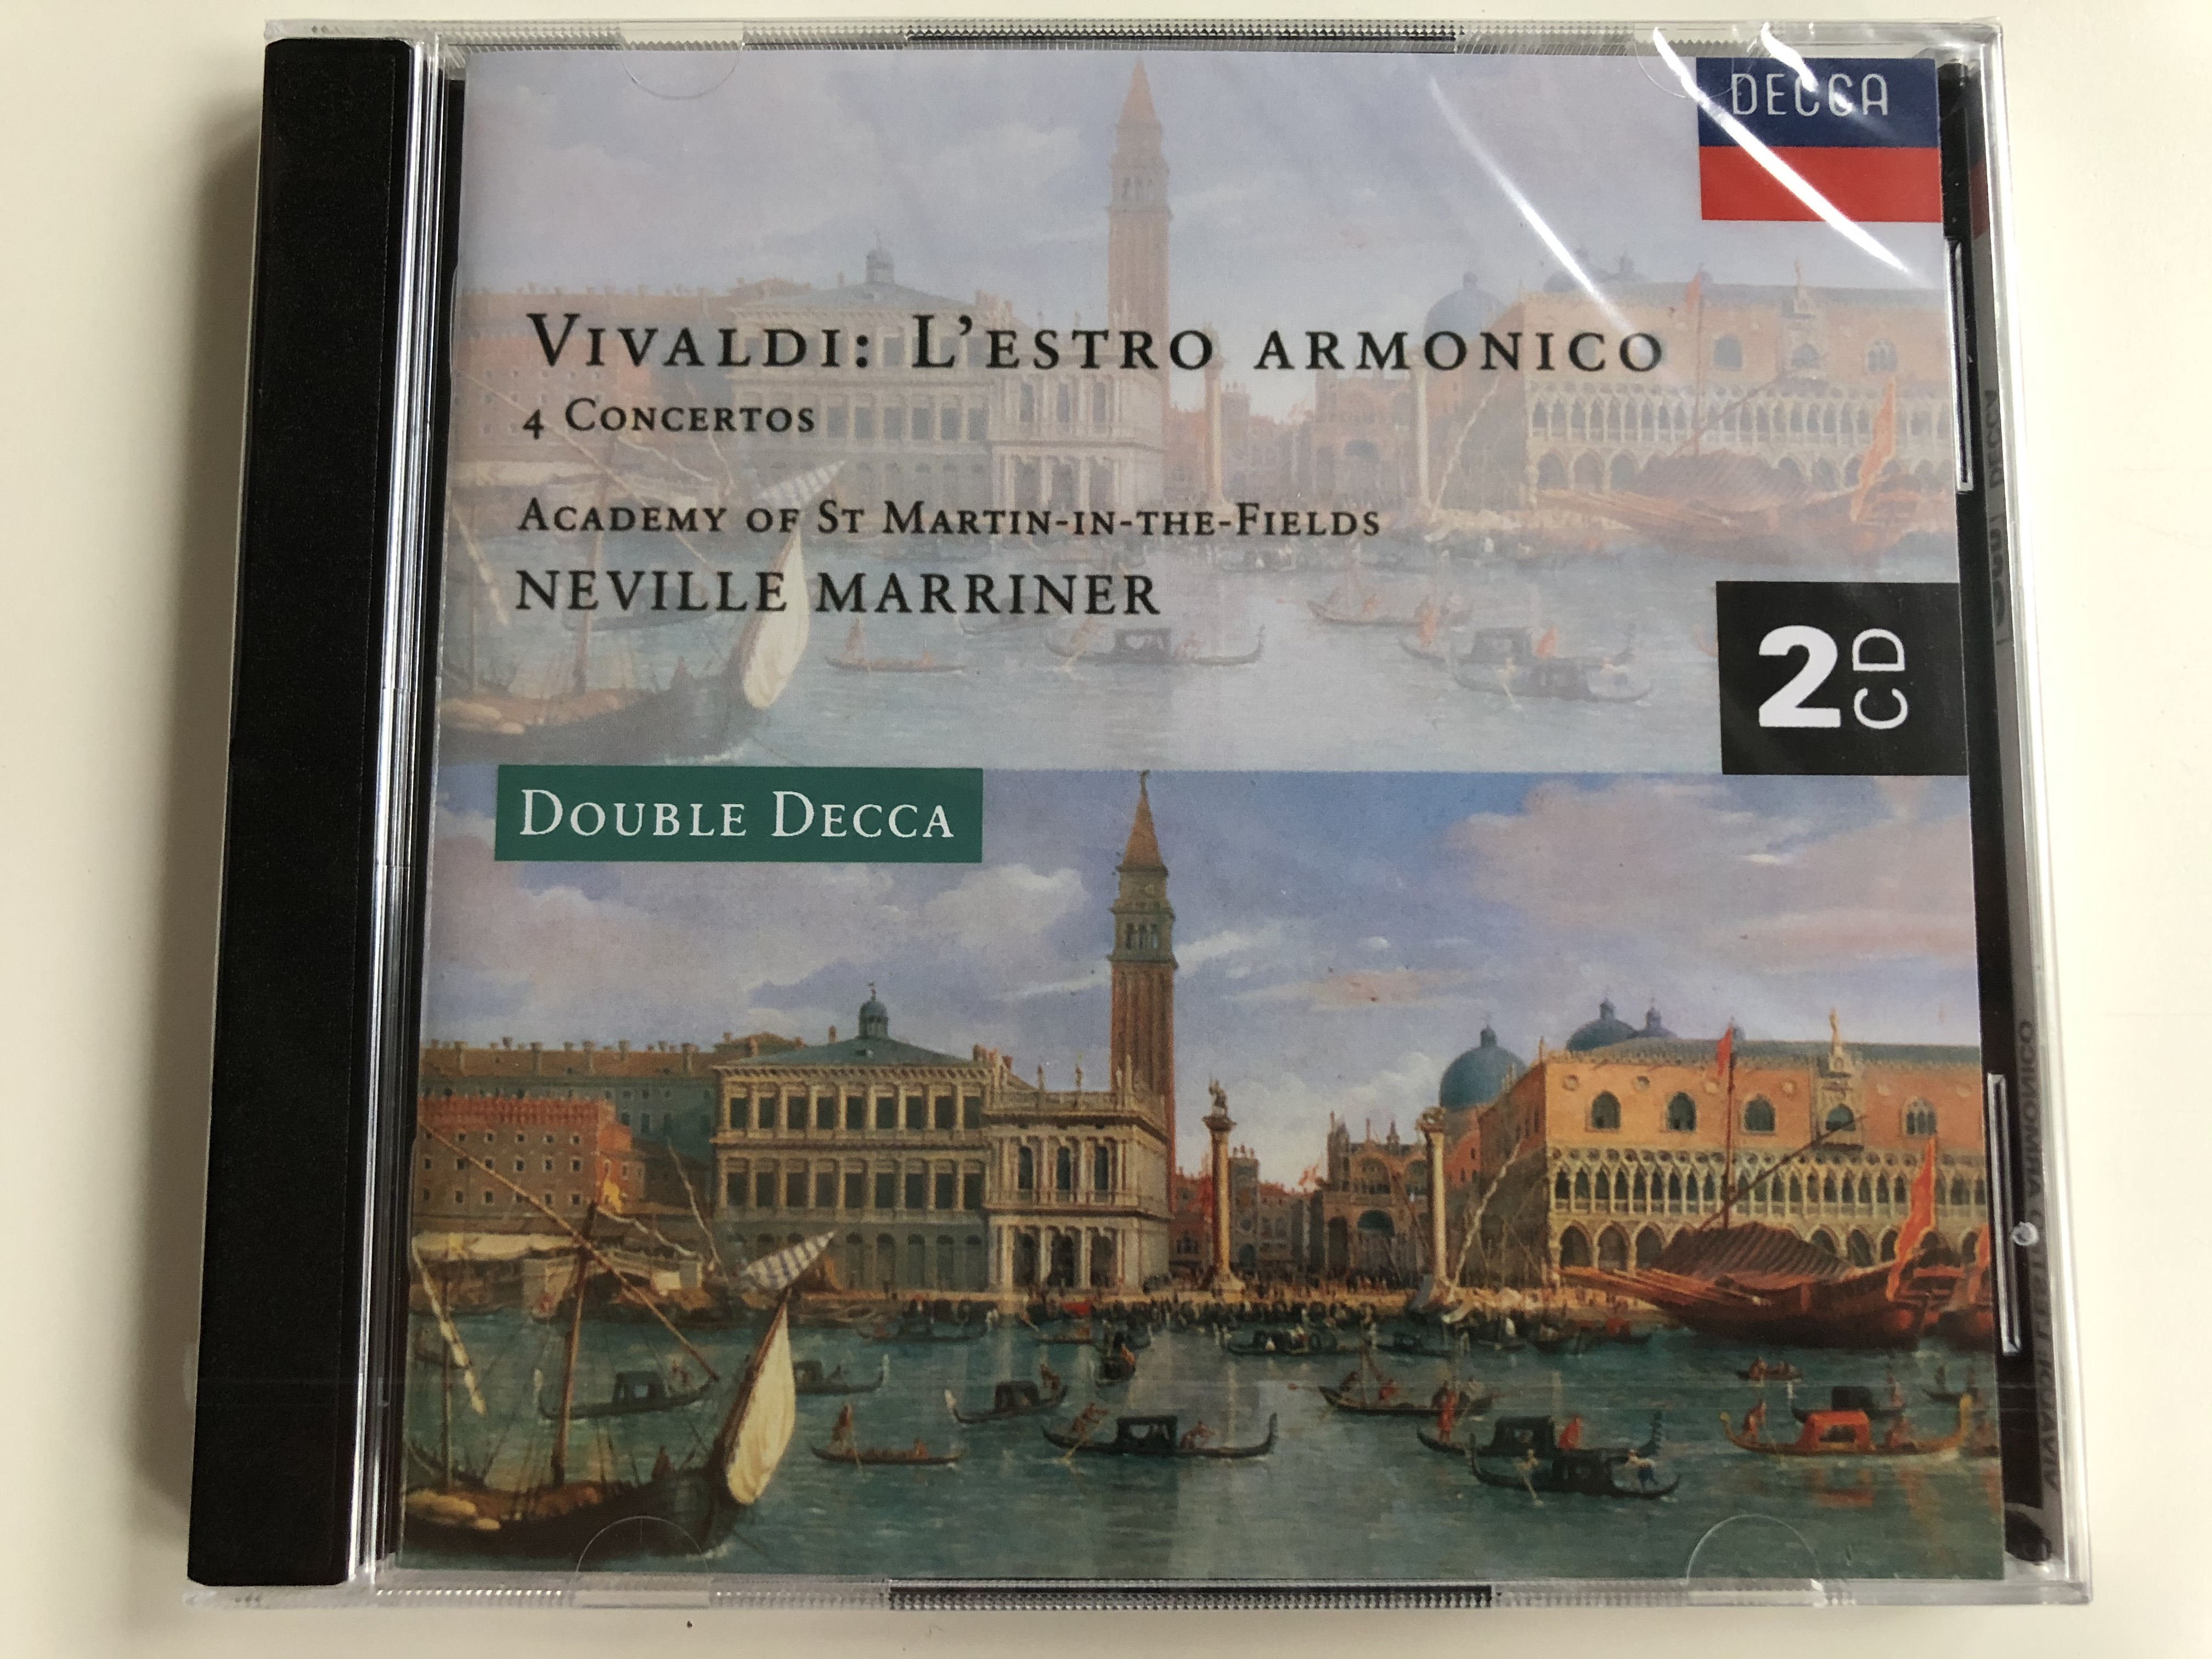 vivaldi-l-estro-armonico-4-concertos-academy-of-st-martin-in-the-fields-double-decca-decca-2x-audio-cd-1994-443-476-2-1-.jpg